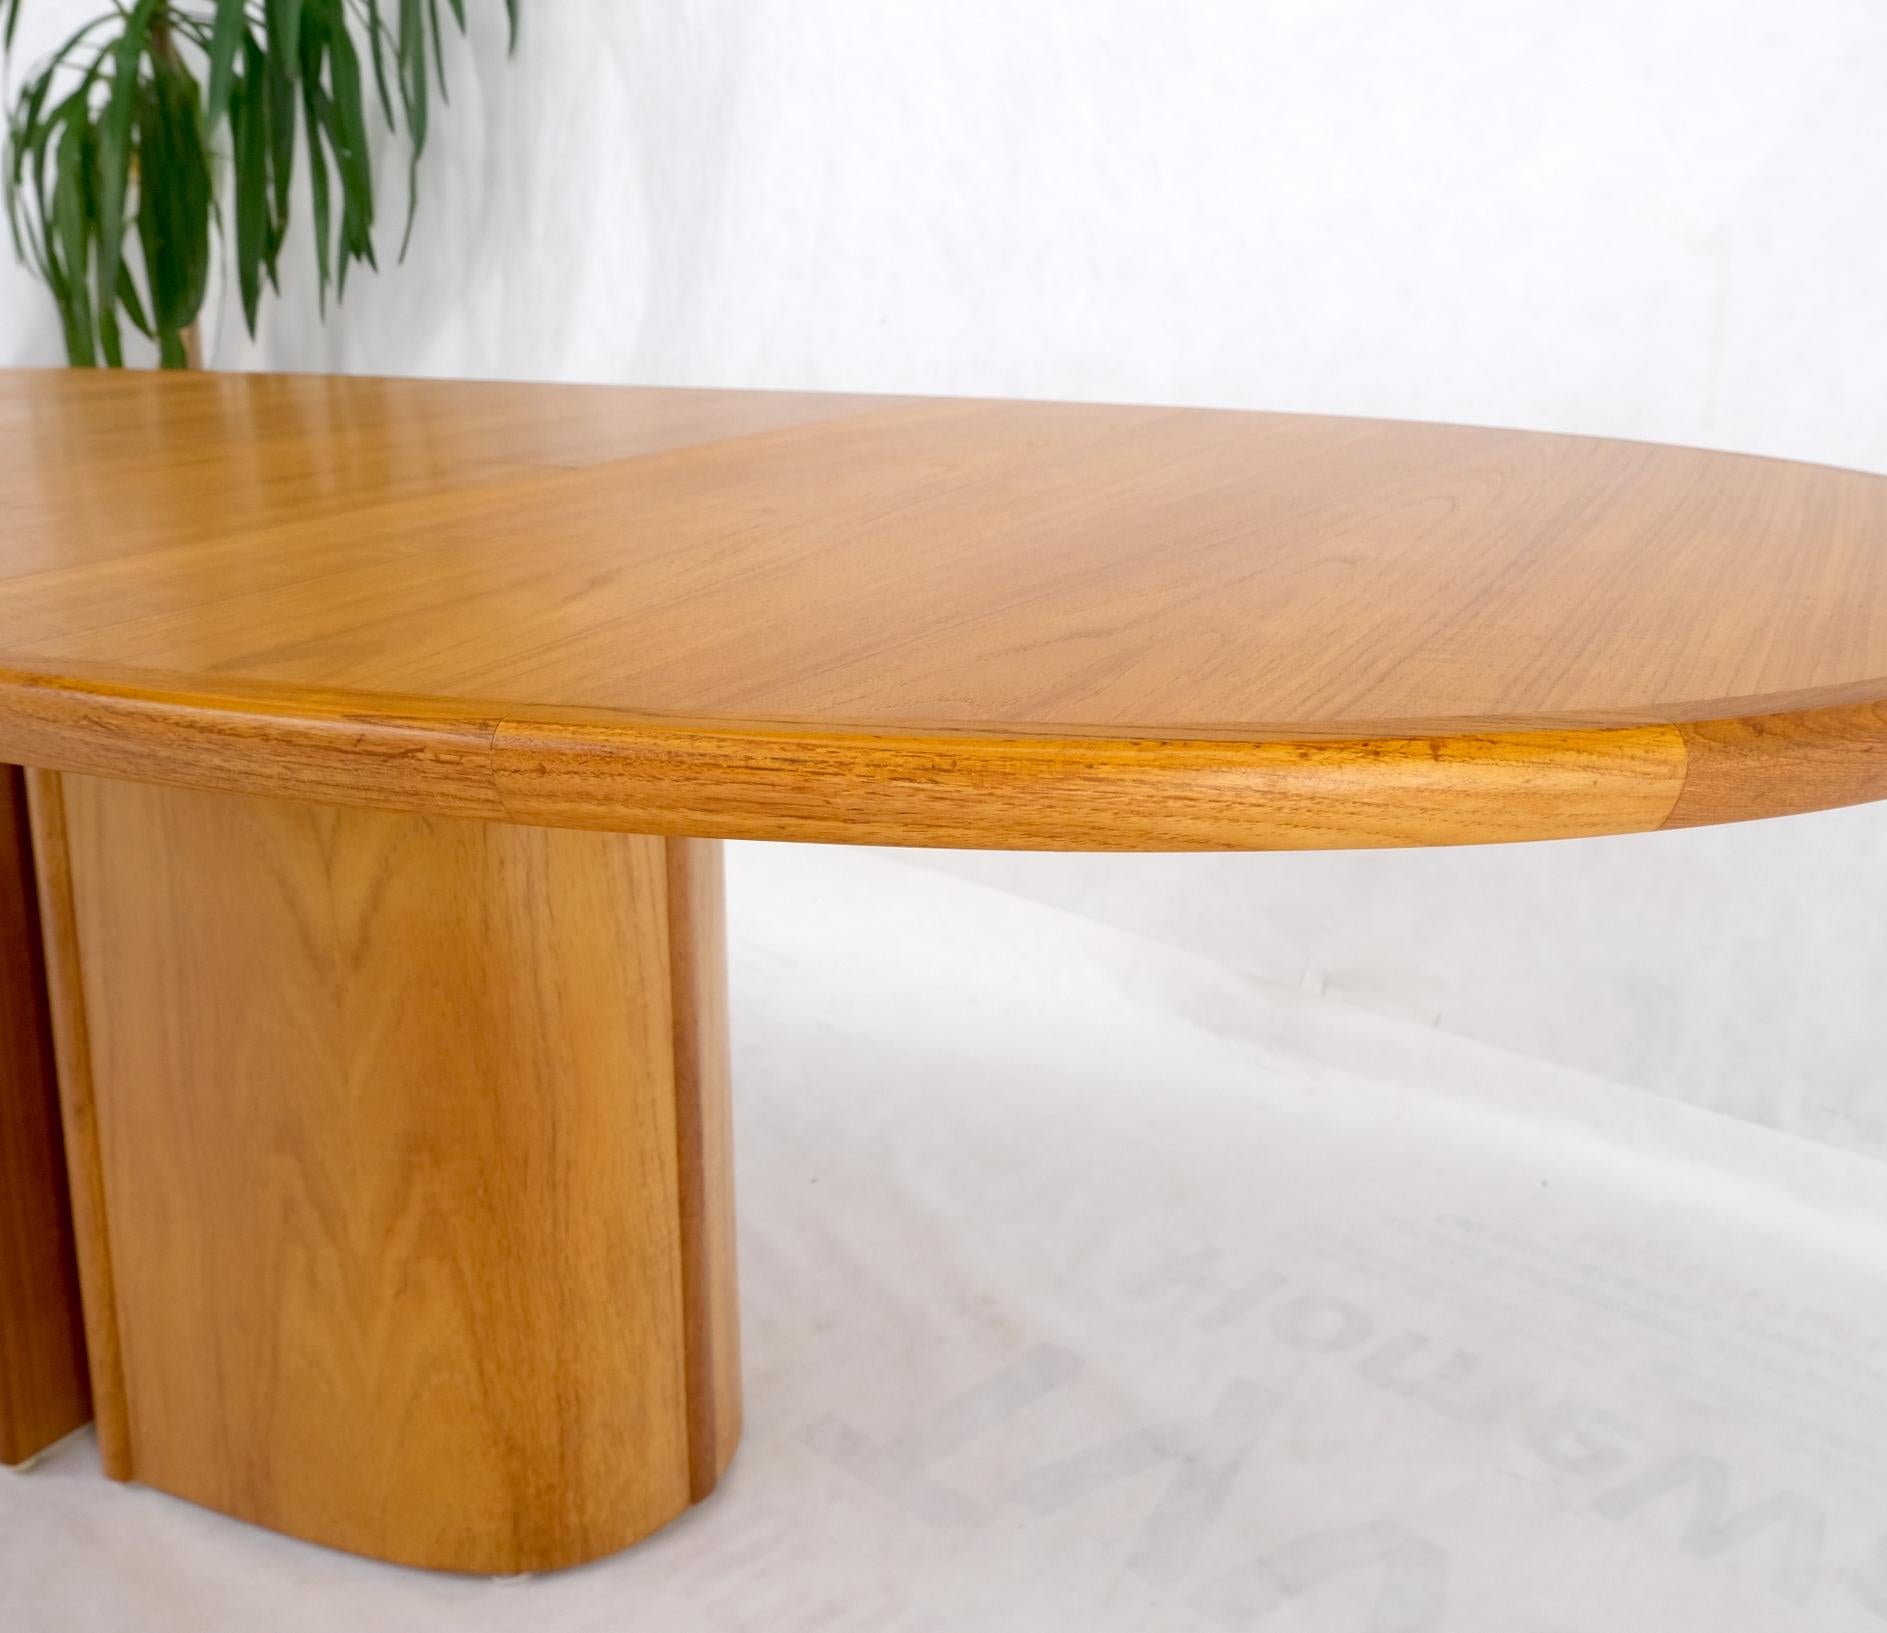 20th Century Danish Mid-Century Modern Oval Teak Dining Table w/ Pop Up Leaf Extension MINT!